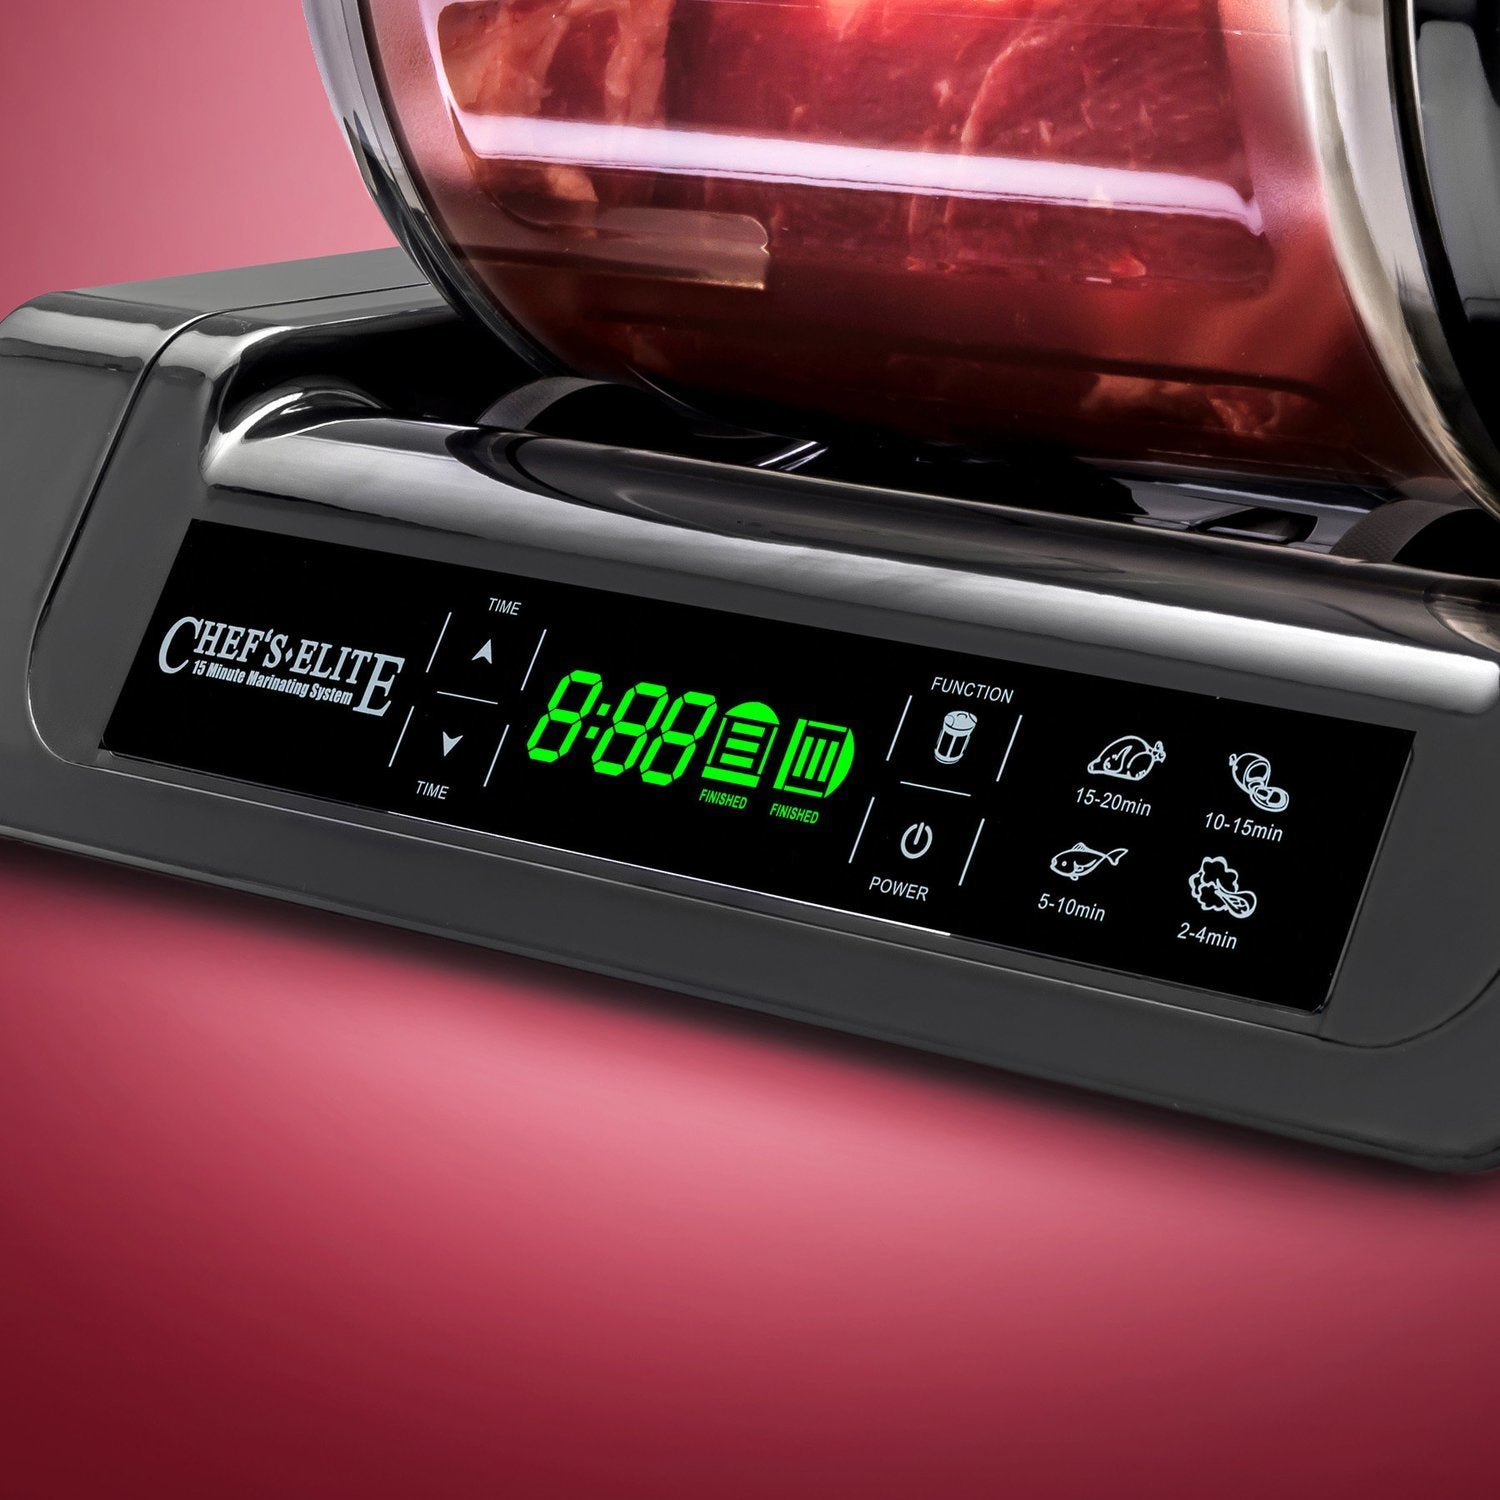 STX Chef's Elite 15 Minute Vacuum-Sealing And Marinating 10lb Capacity System